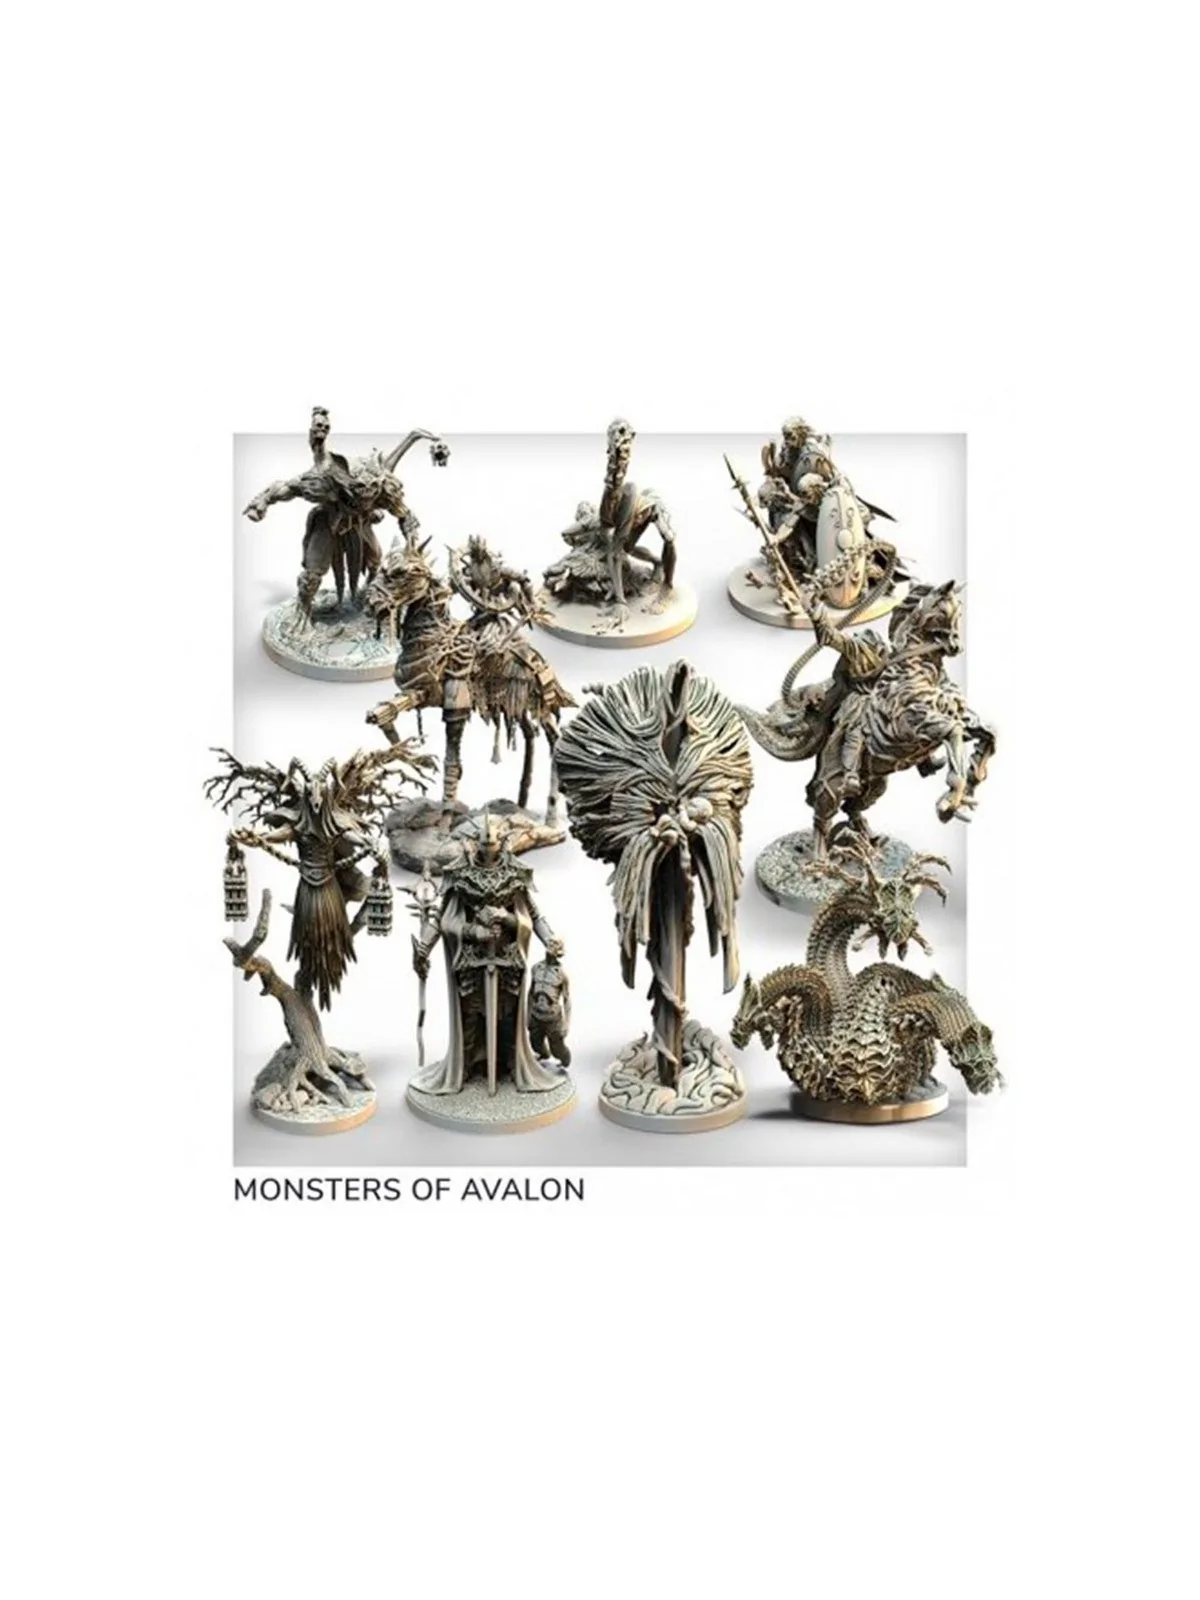 Comprar Tainted Grail: Monsters of Avalon (Inglés) barato al mejor pre